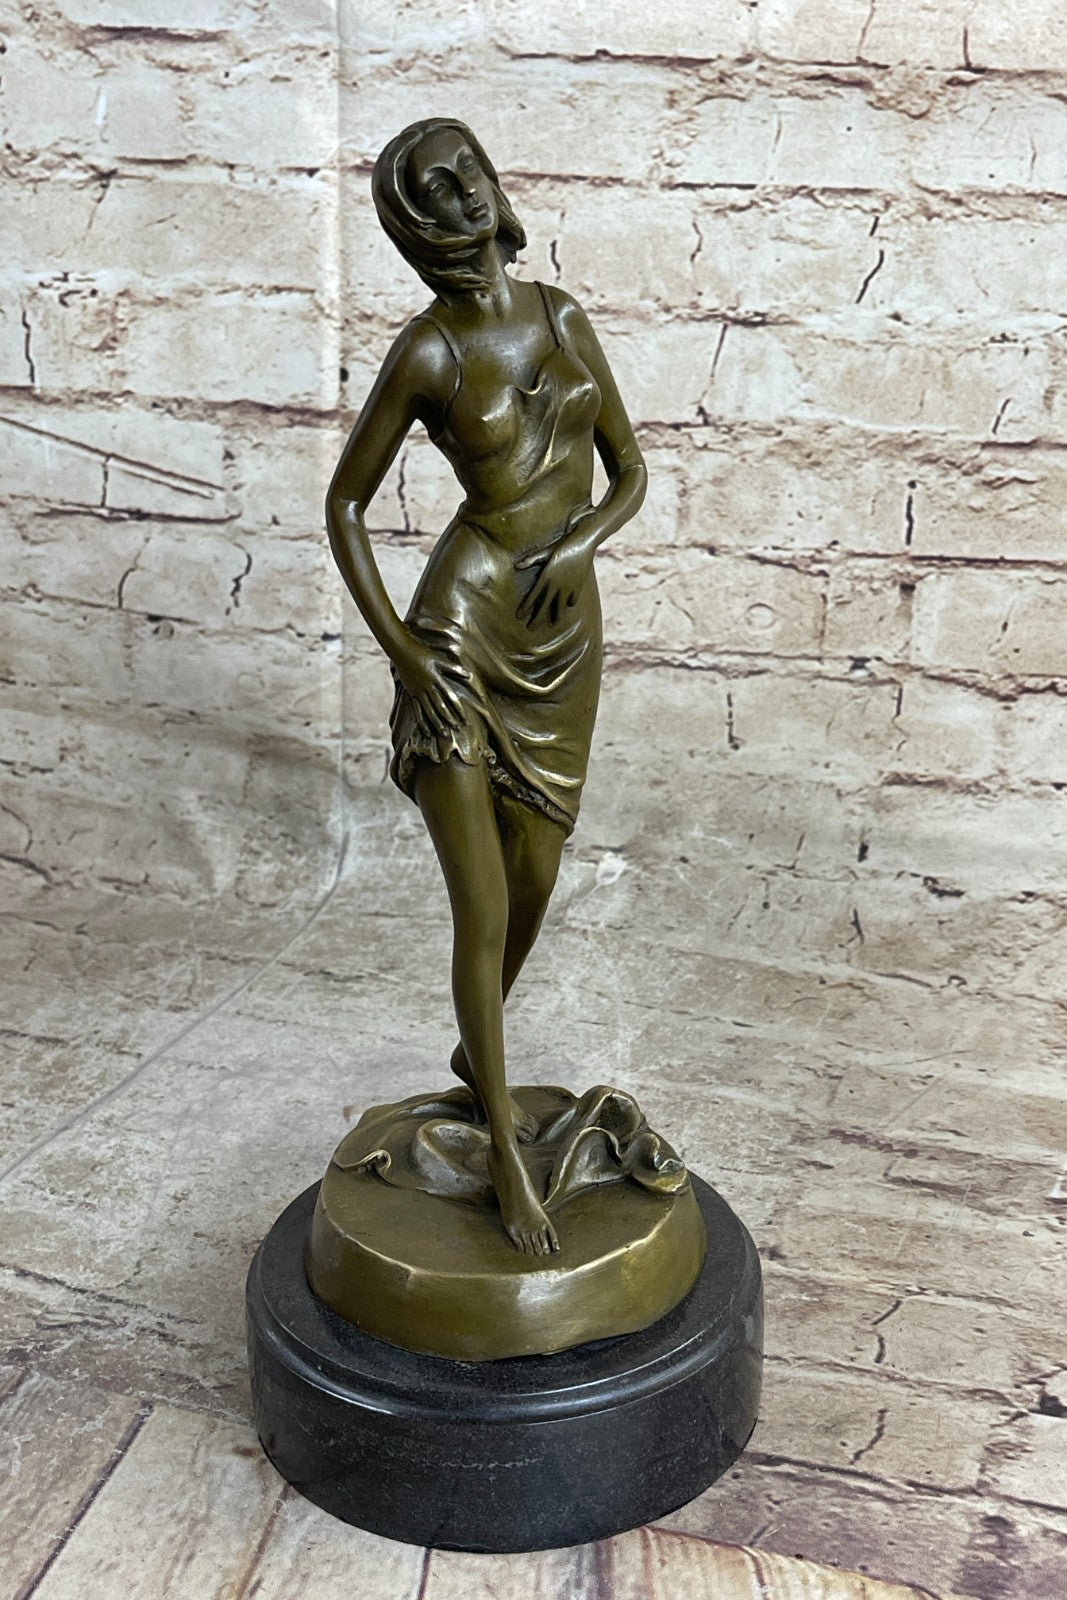 100% Genuine Solid Nude Woman Female Girl Lady Bronze Sculpture Artwork